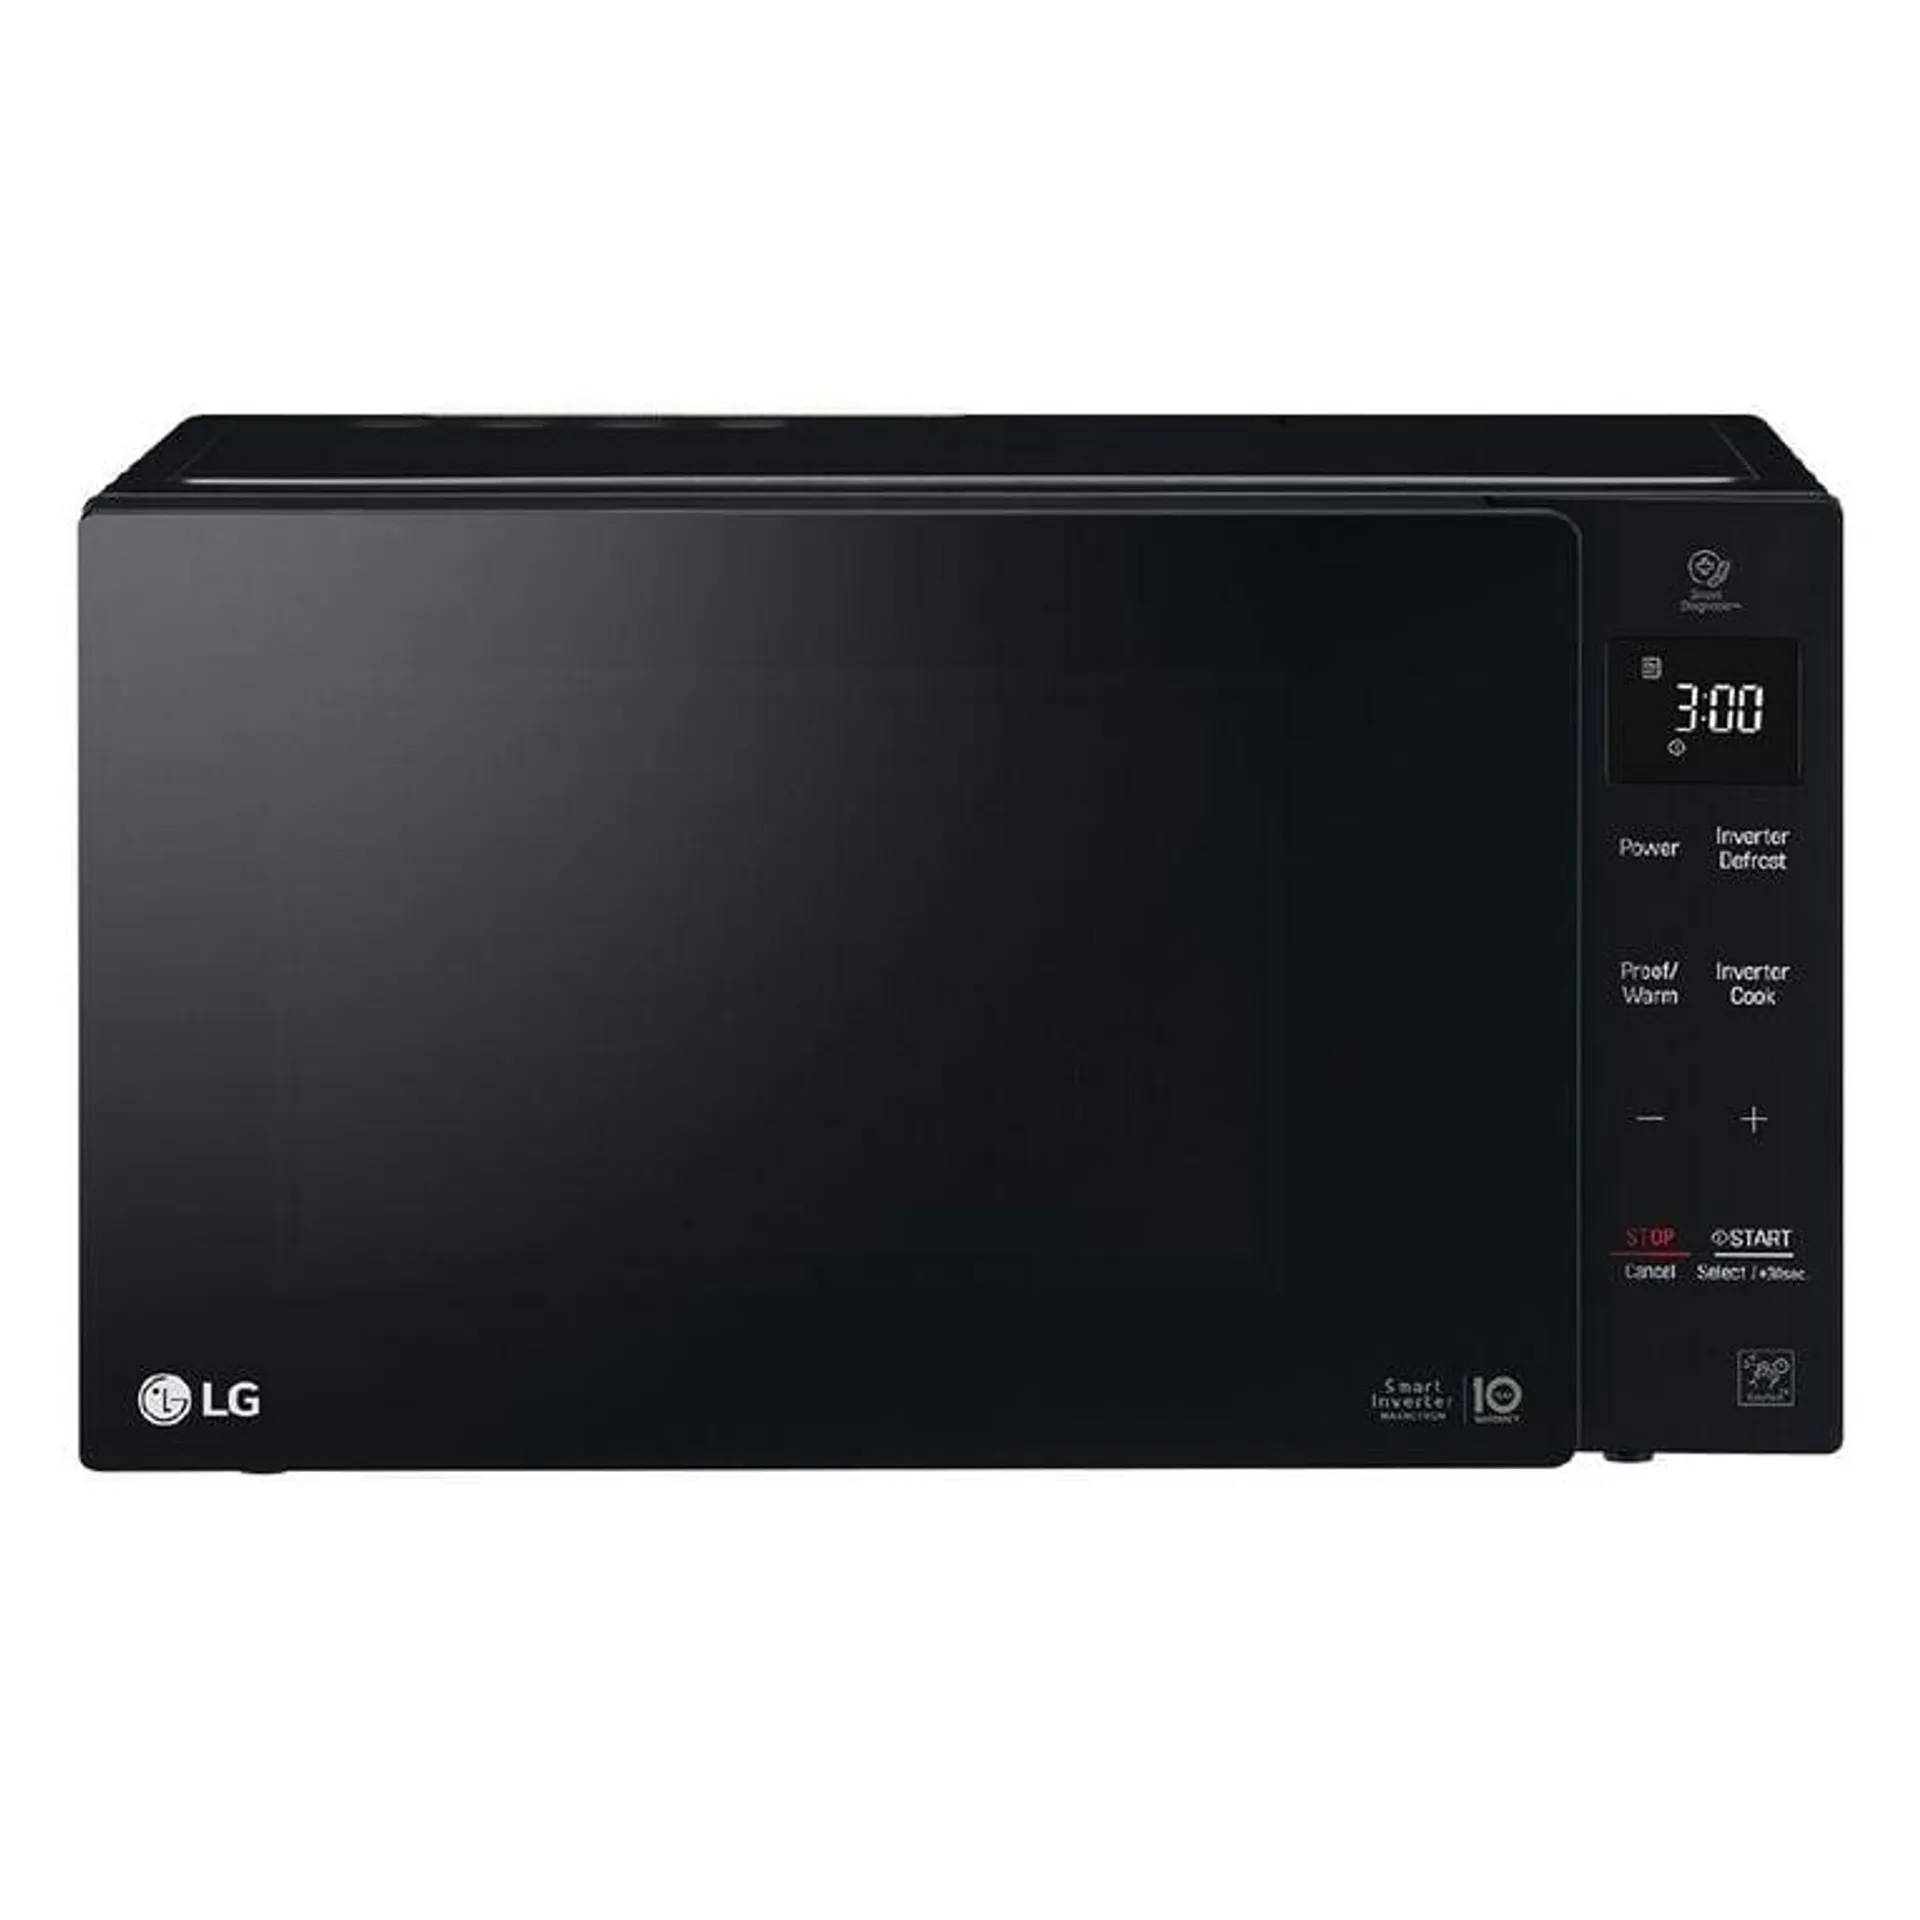 LG 23L NeoChef Smart Inverter Microwave